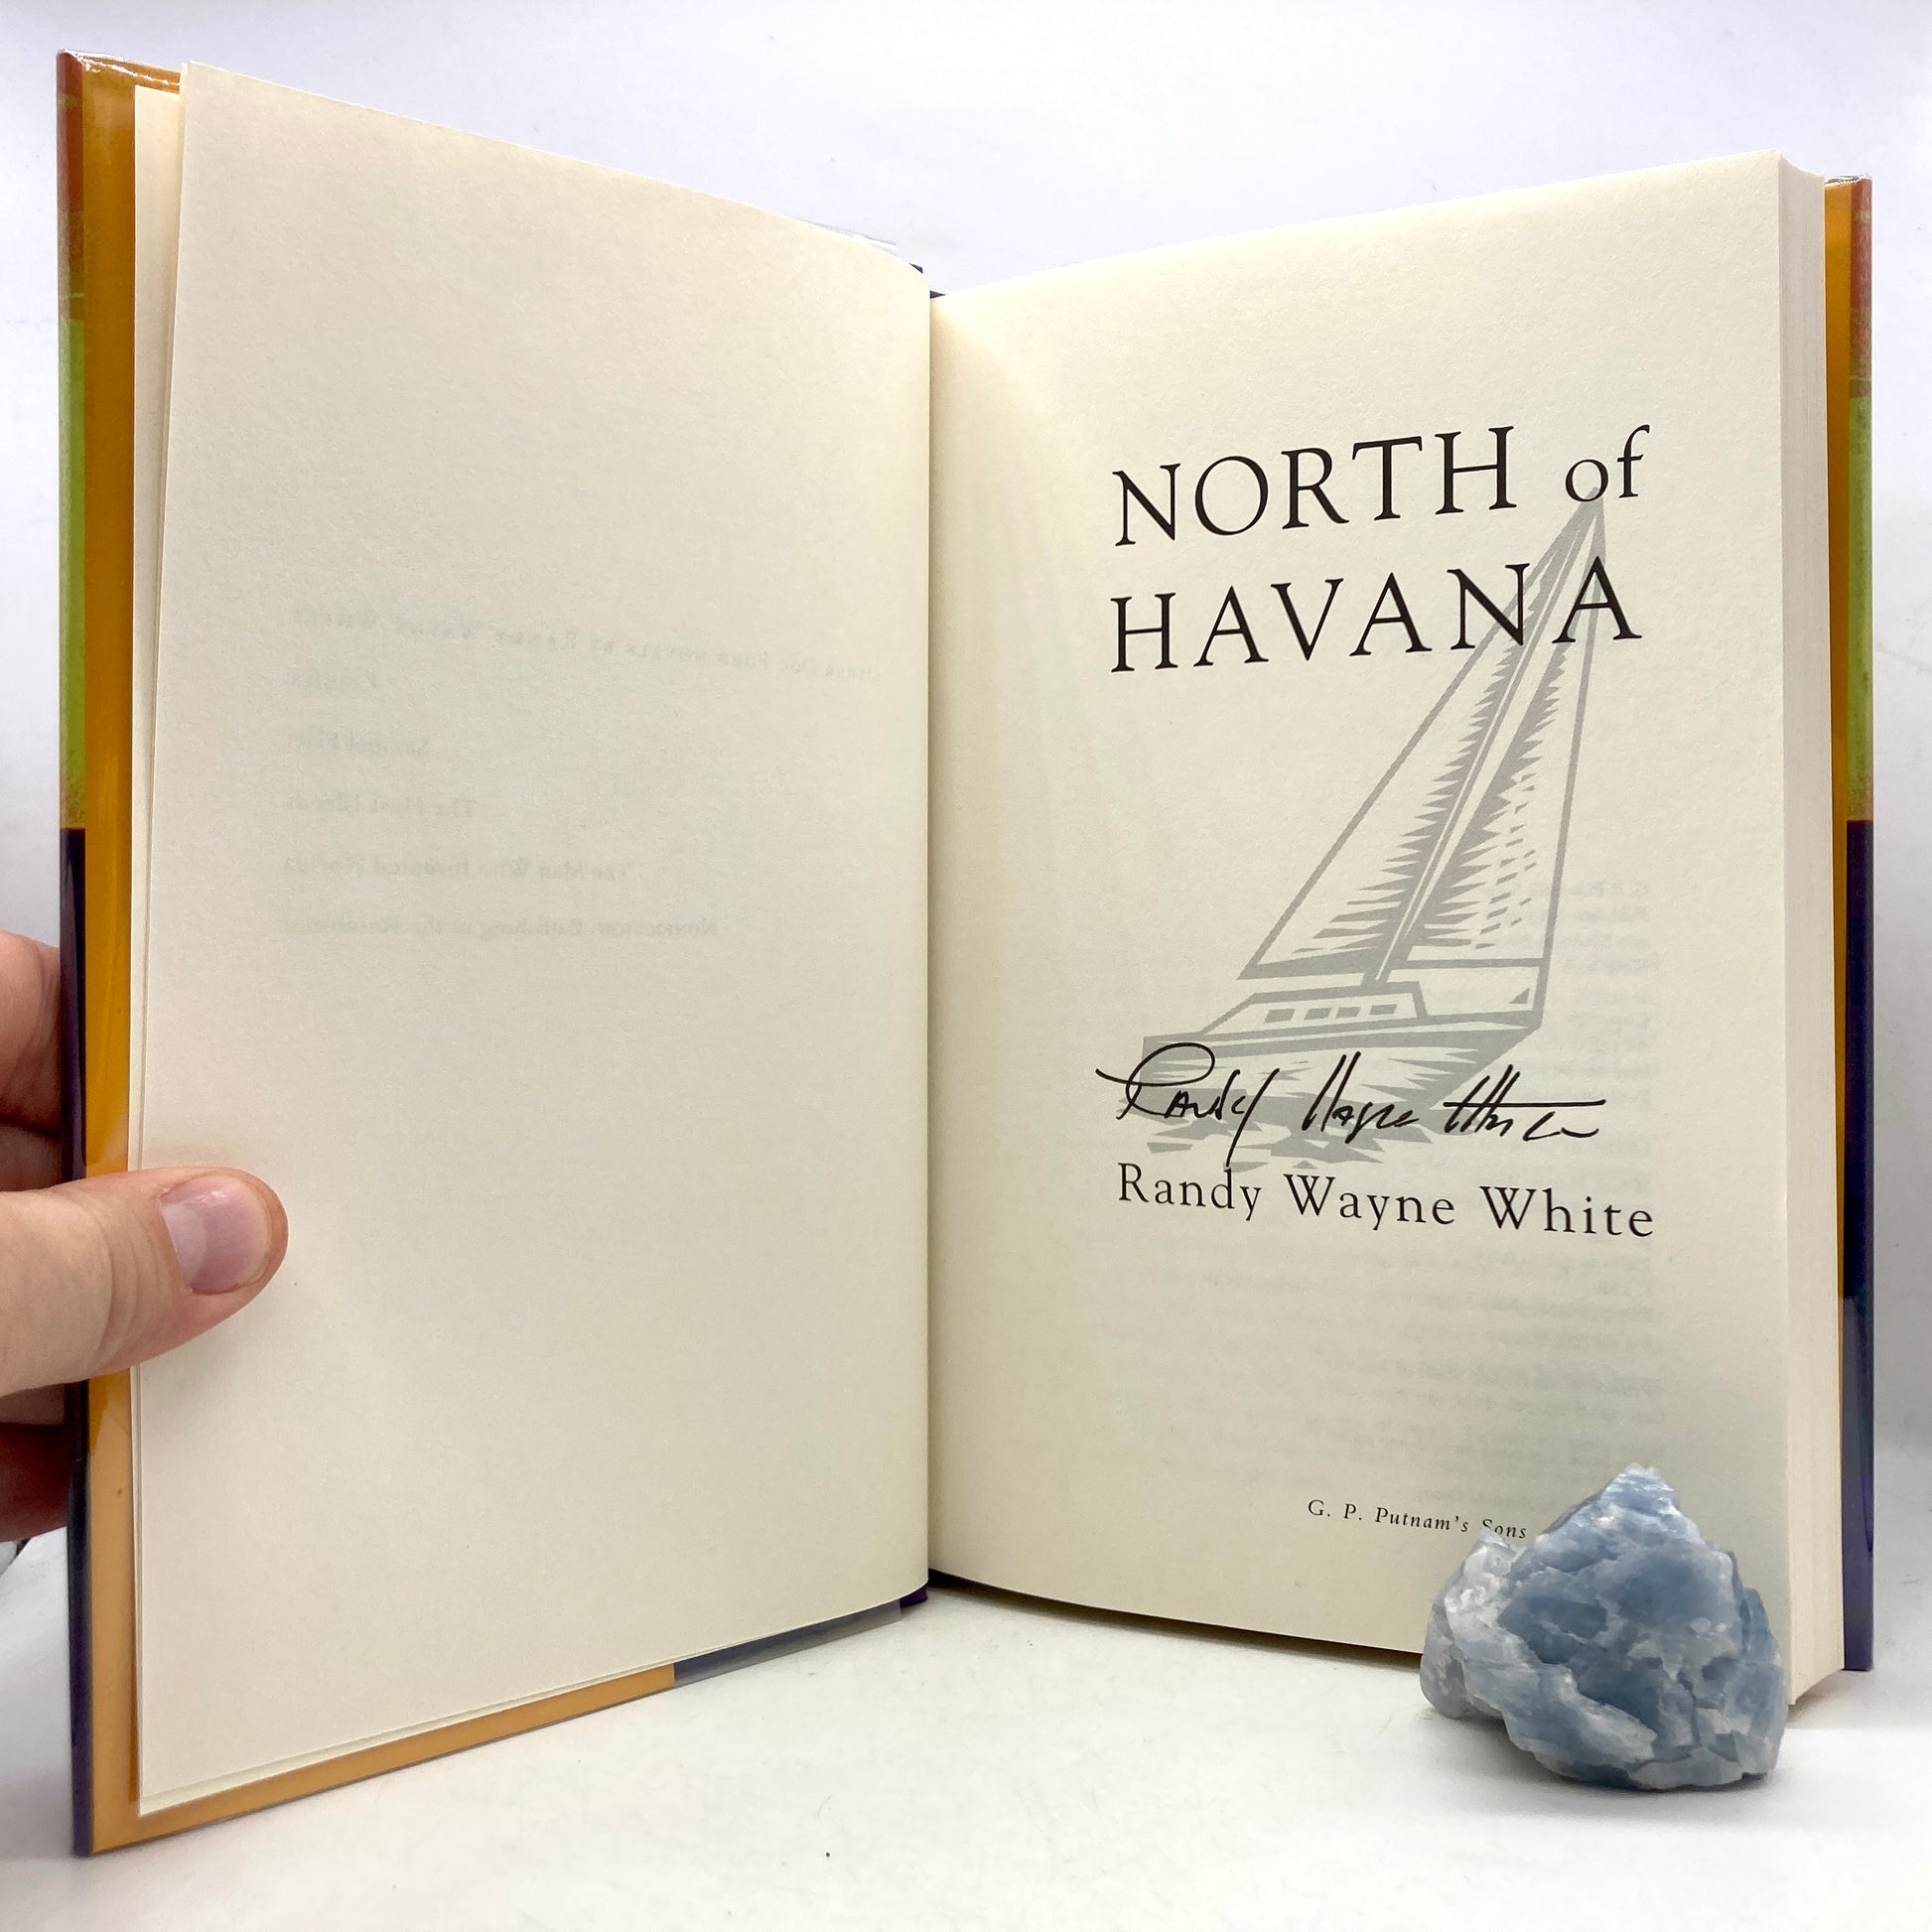 WHITE, Randy Wayne "North of Havana" [GP Putnam's Sons, 1997] 1st Edition (Signed) - Buzz Bookstore